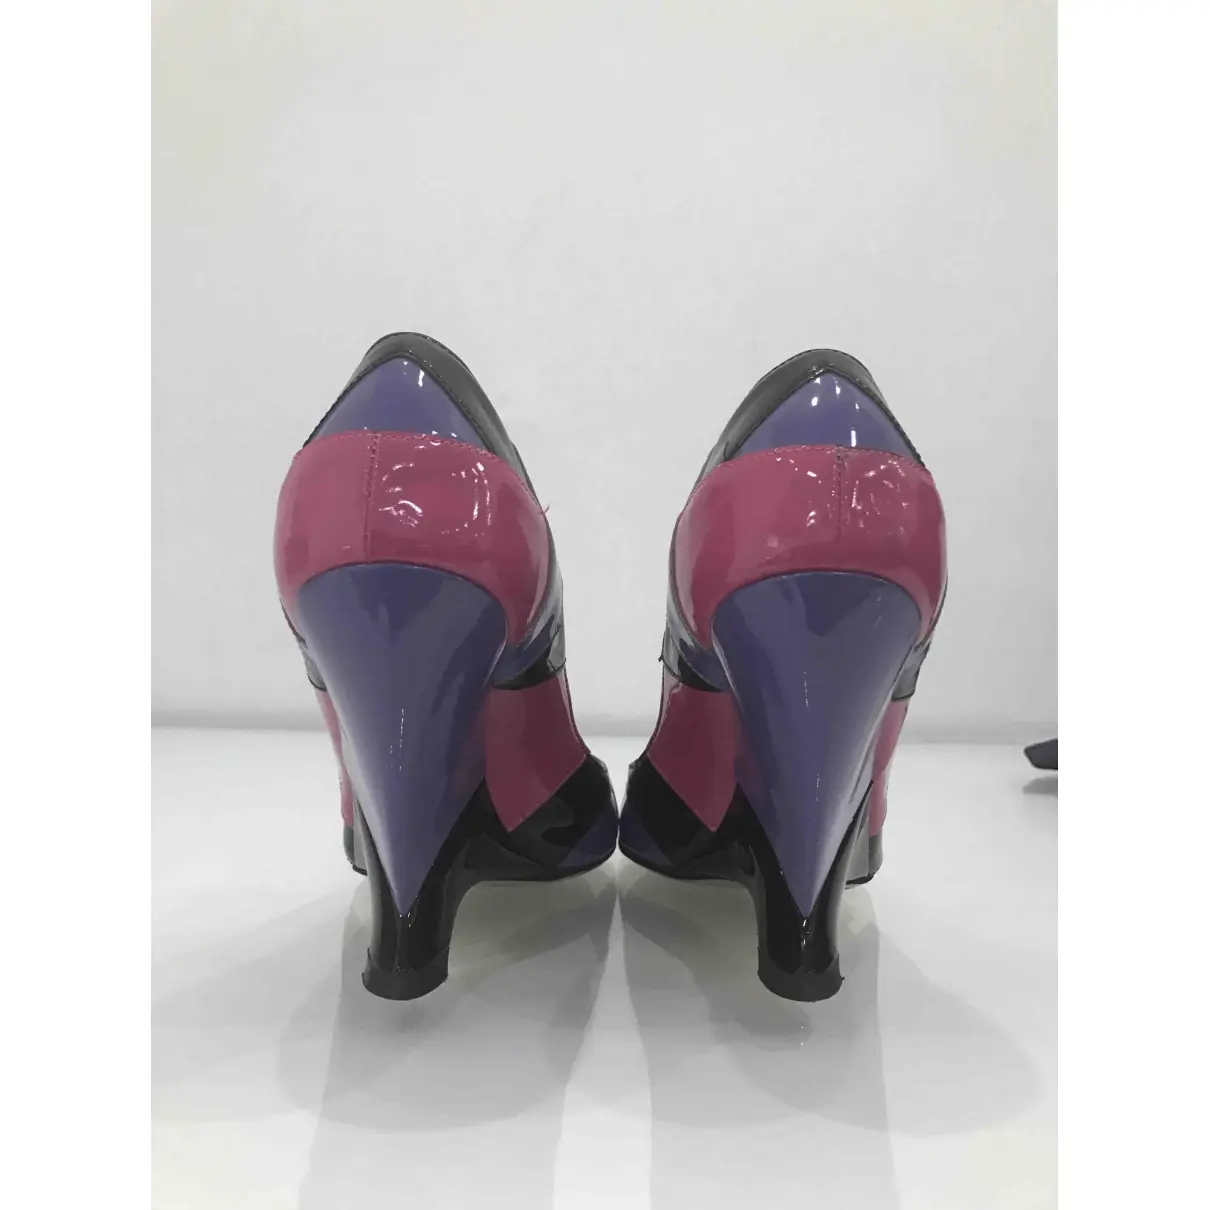 Buy SEBASTIAN Patent leather heels online